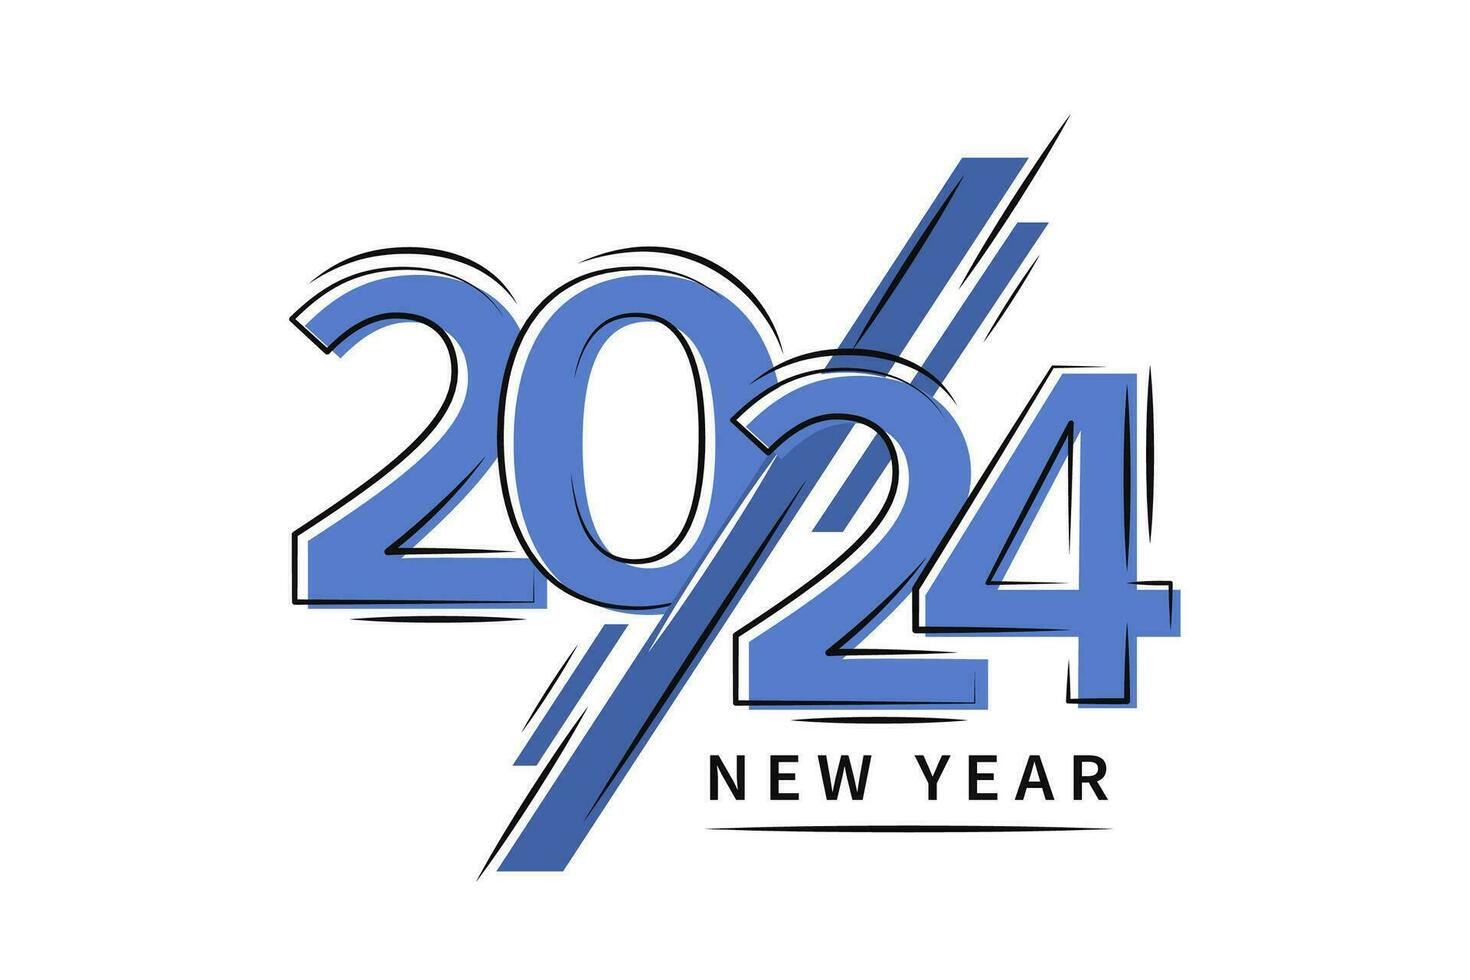 2024 New Year logo text design. Vector illustration